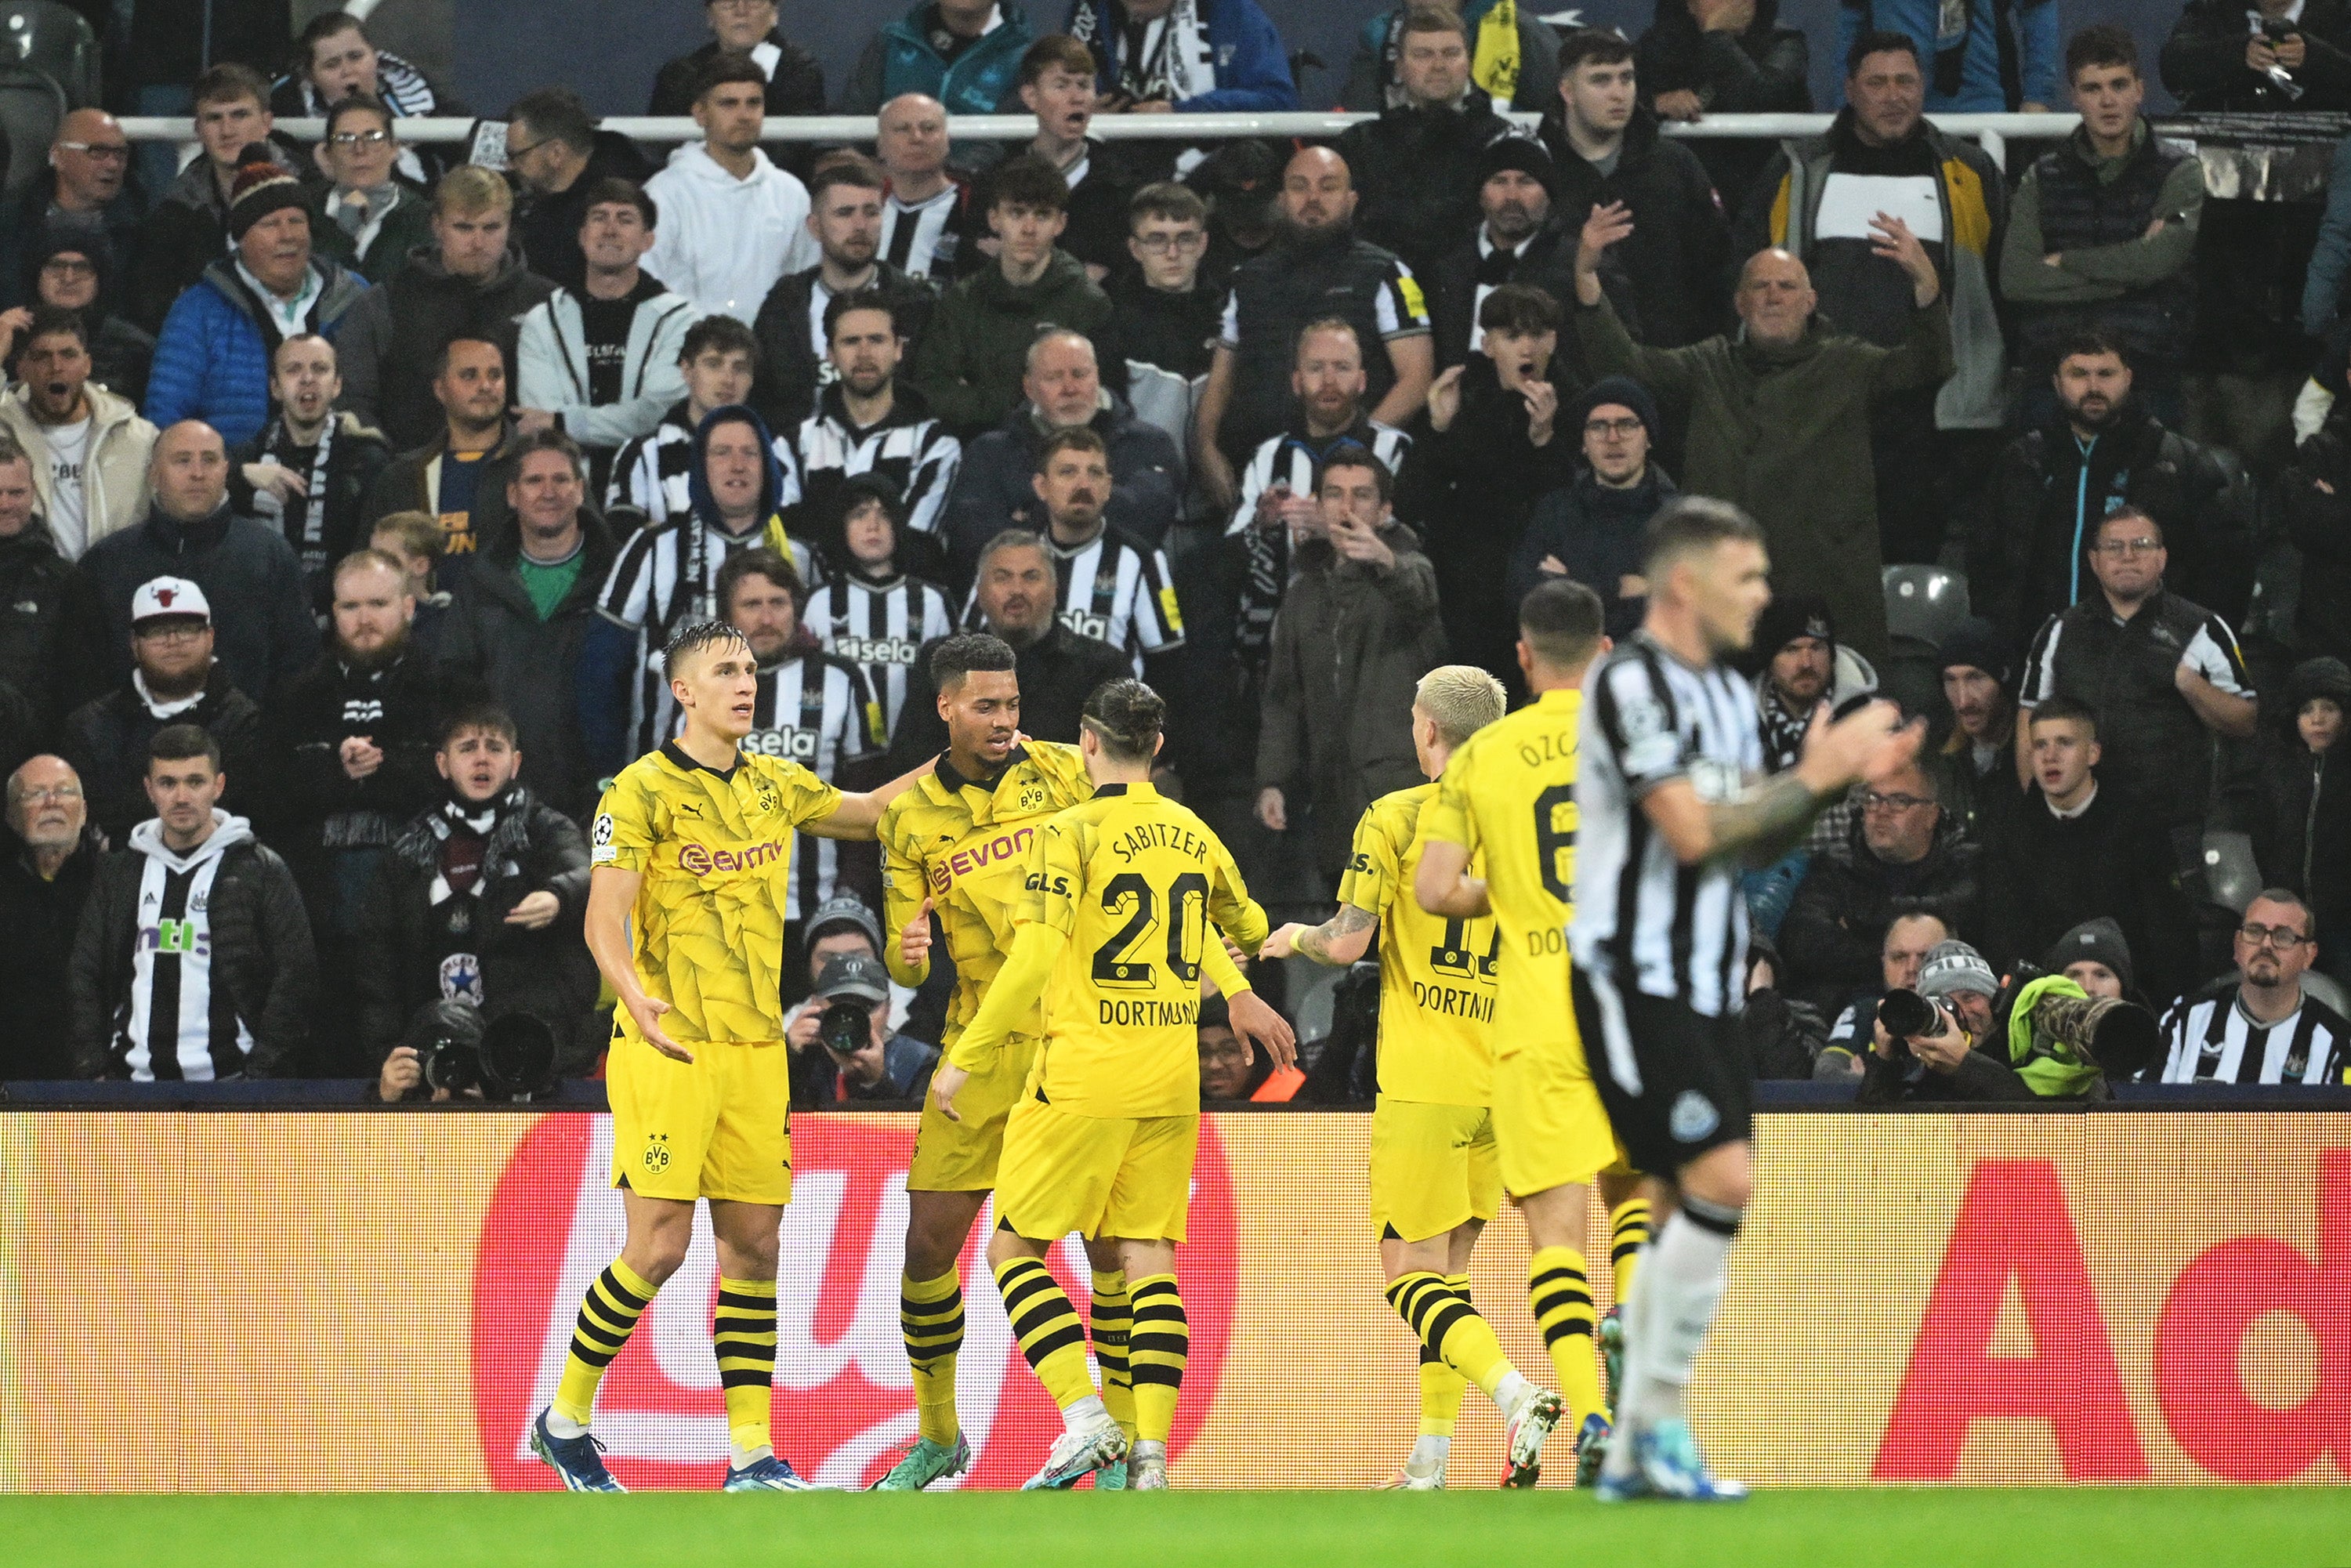 Dortmund celebrate their winning goal